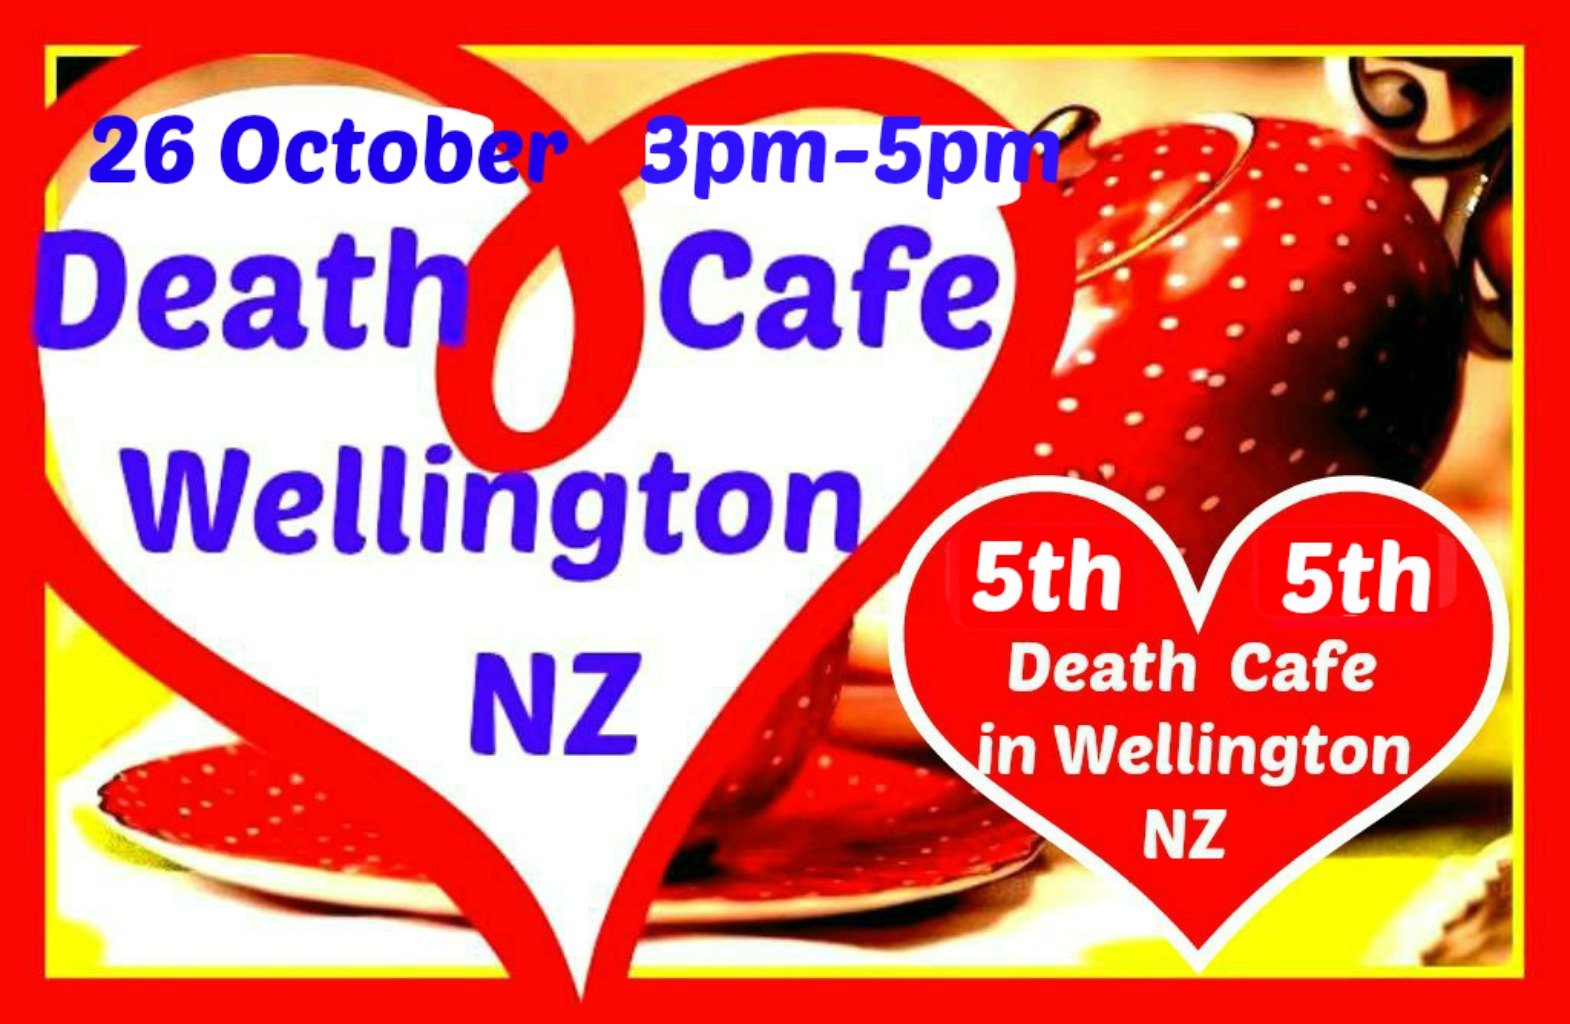 Death Cafe Wellington NZ